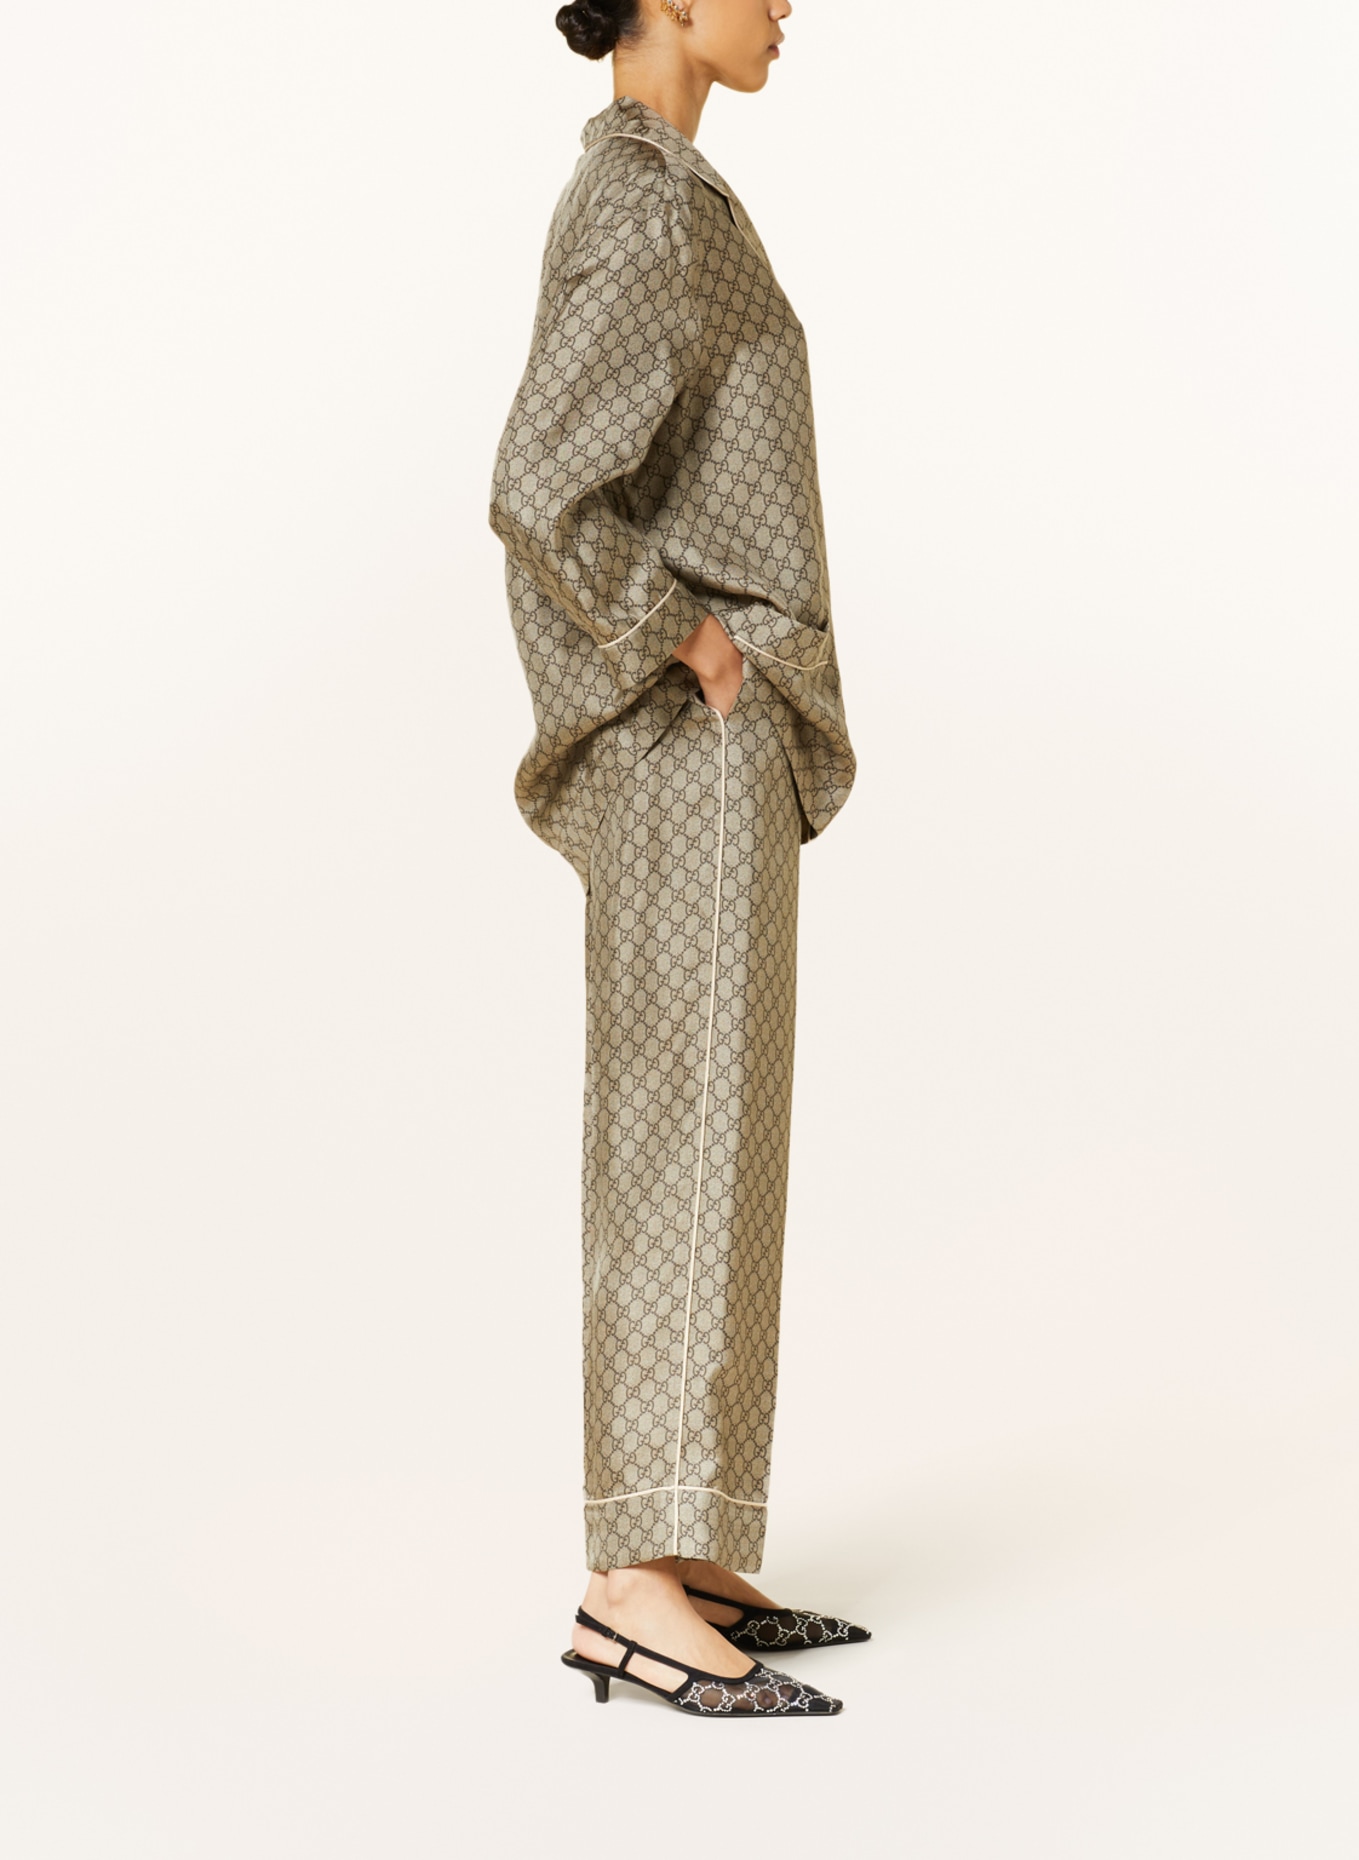 ZARA Size 6 28 Mid-Rise Snakeskin Print Dress Pants Trousers | eBay